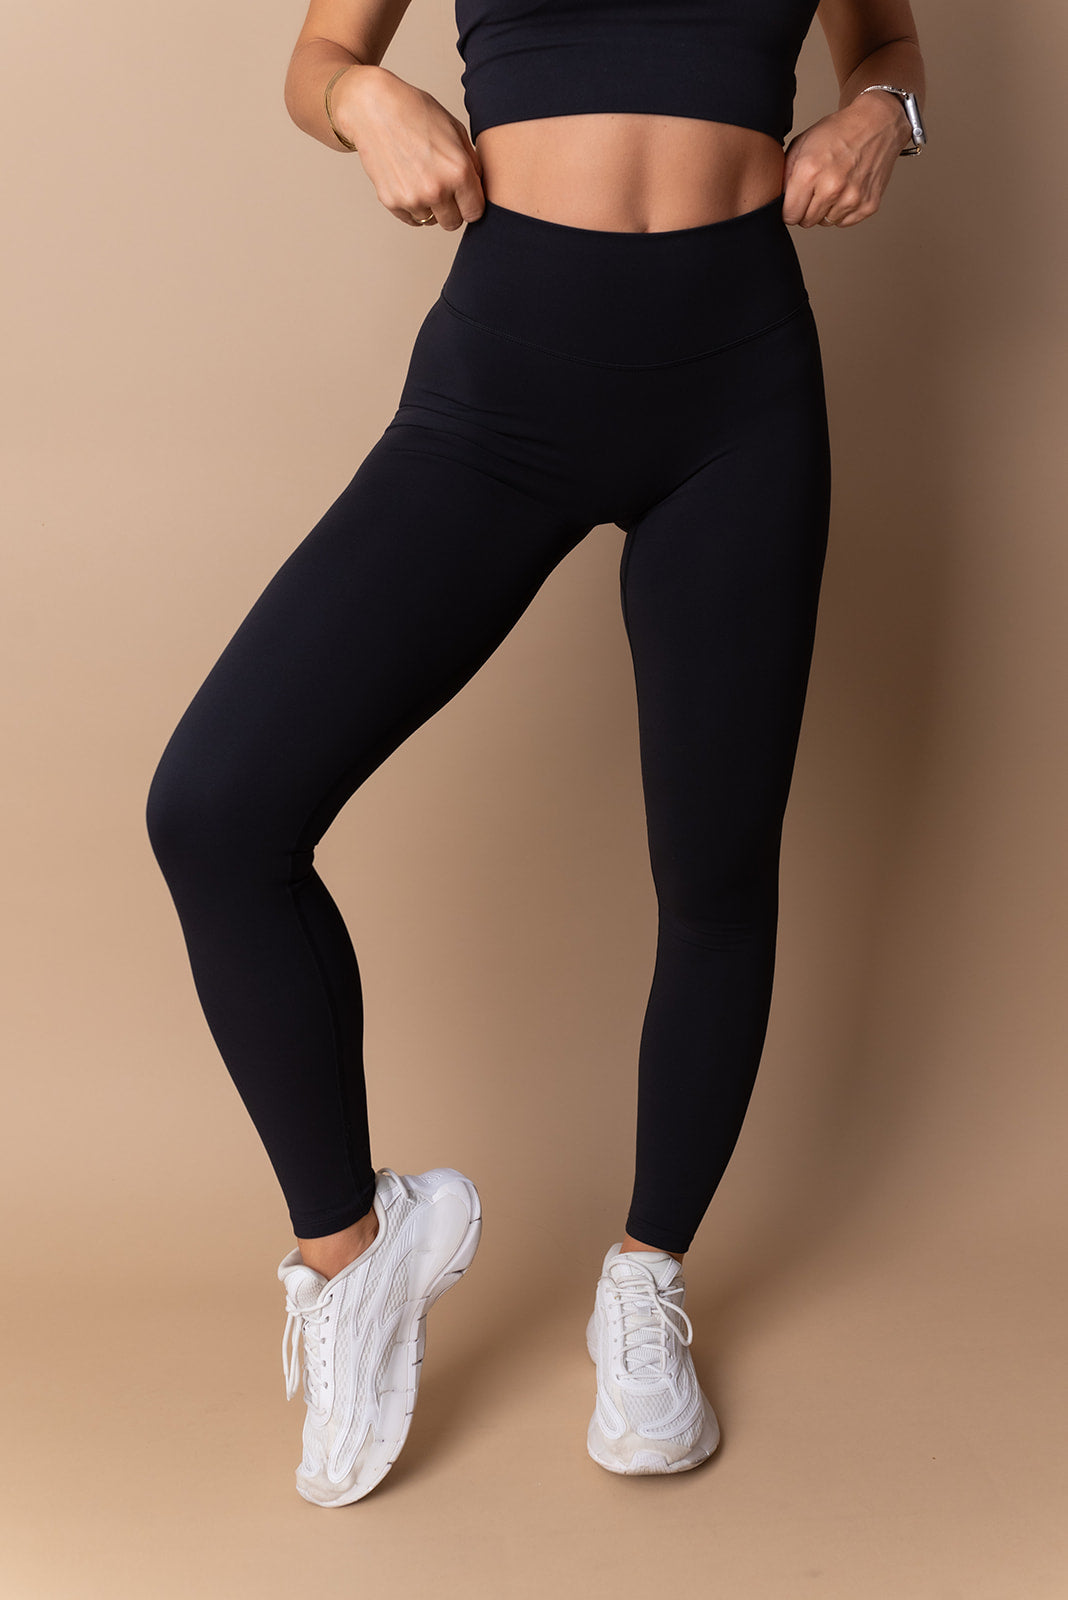 Teal Sculpt Luxe High Waist Gym Leggings  Gym leggings, High waisted,  Activewear fashion